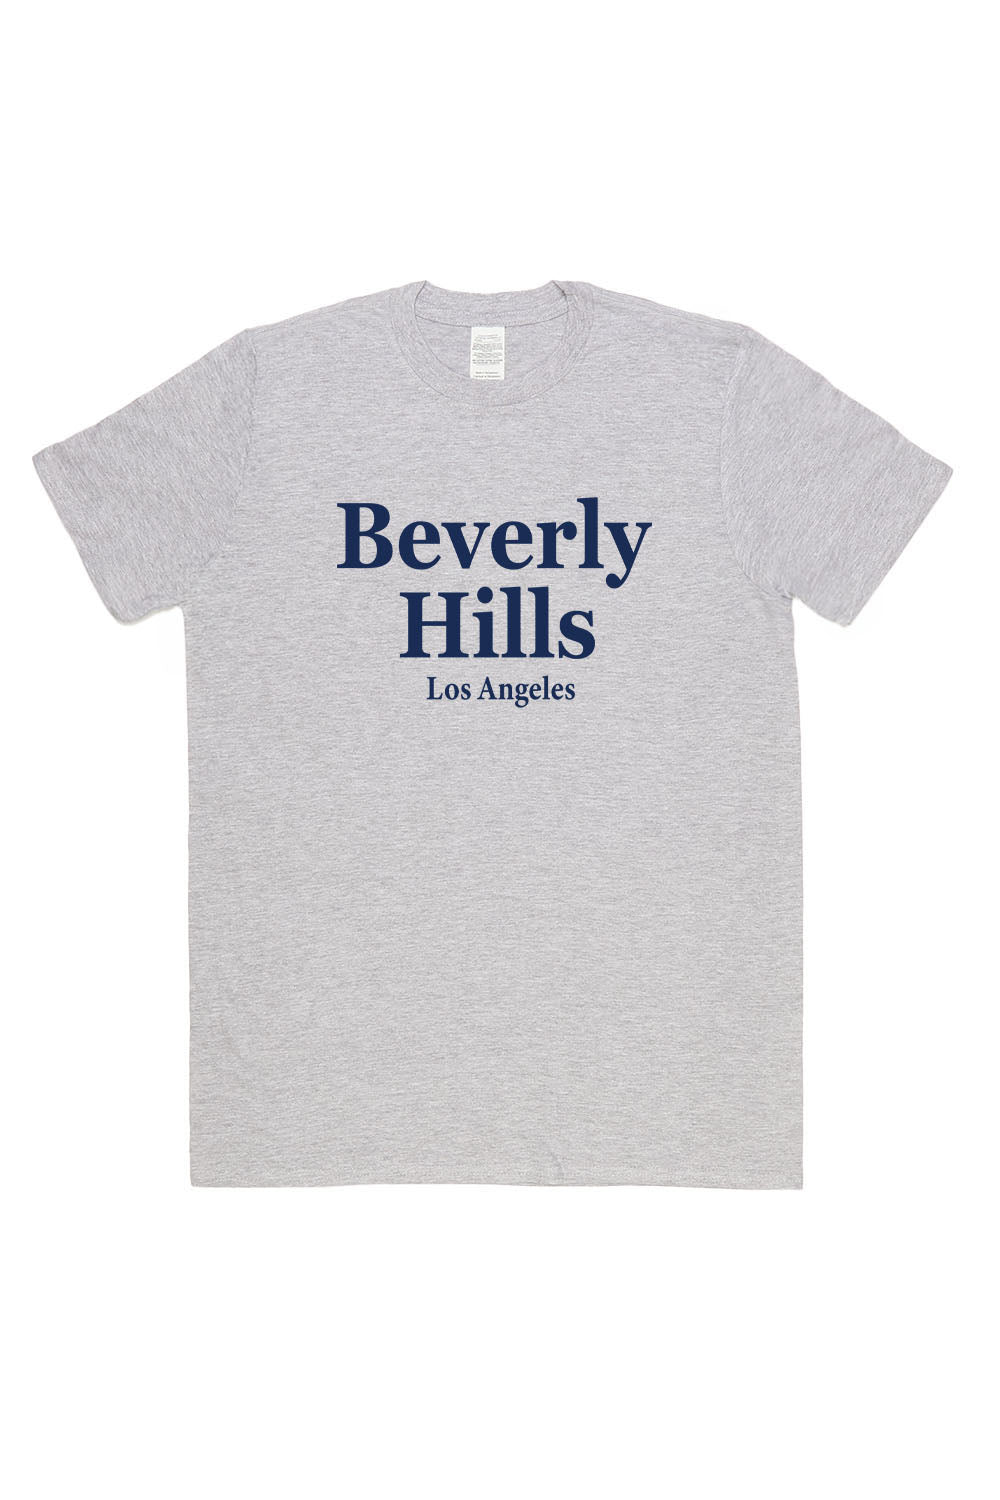 Beverly Hills T-Shirt in Ash Grey (Custom Packs)